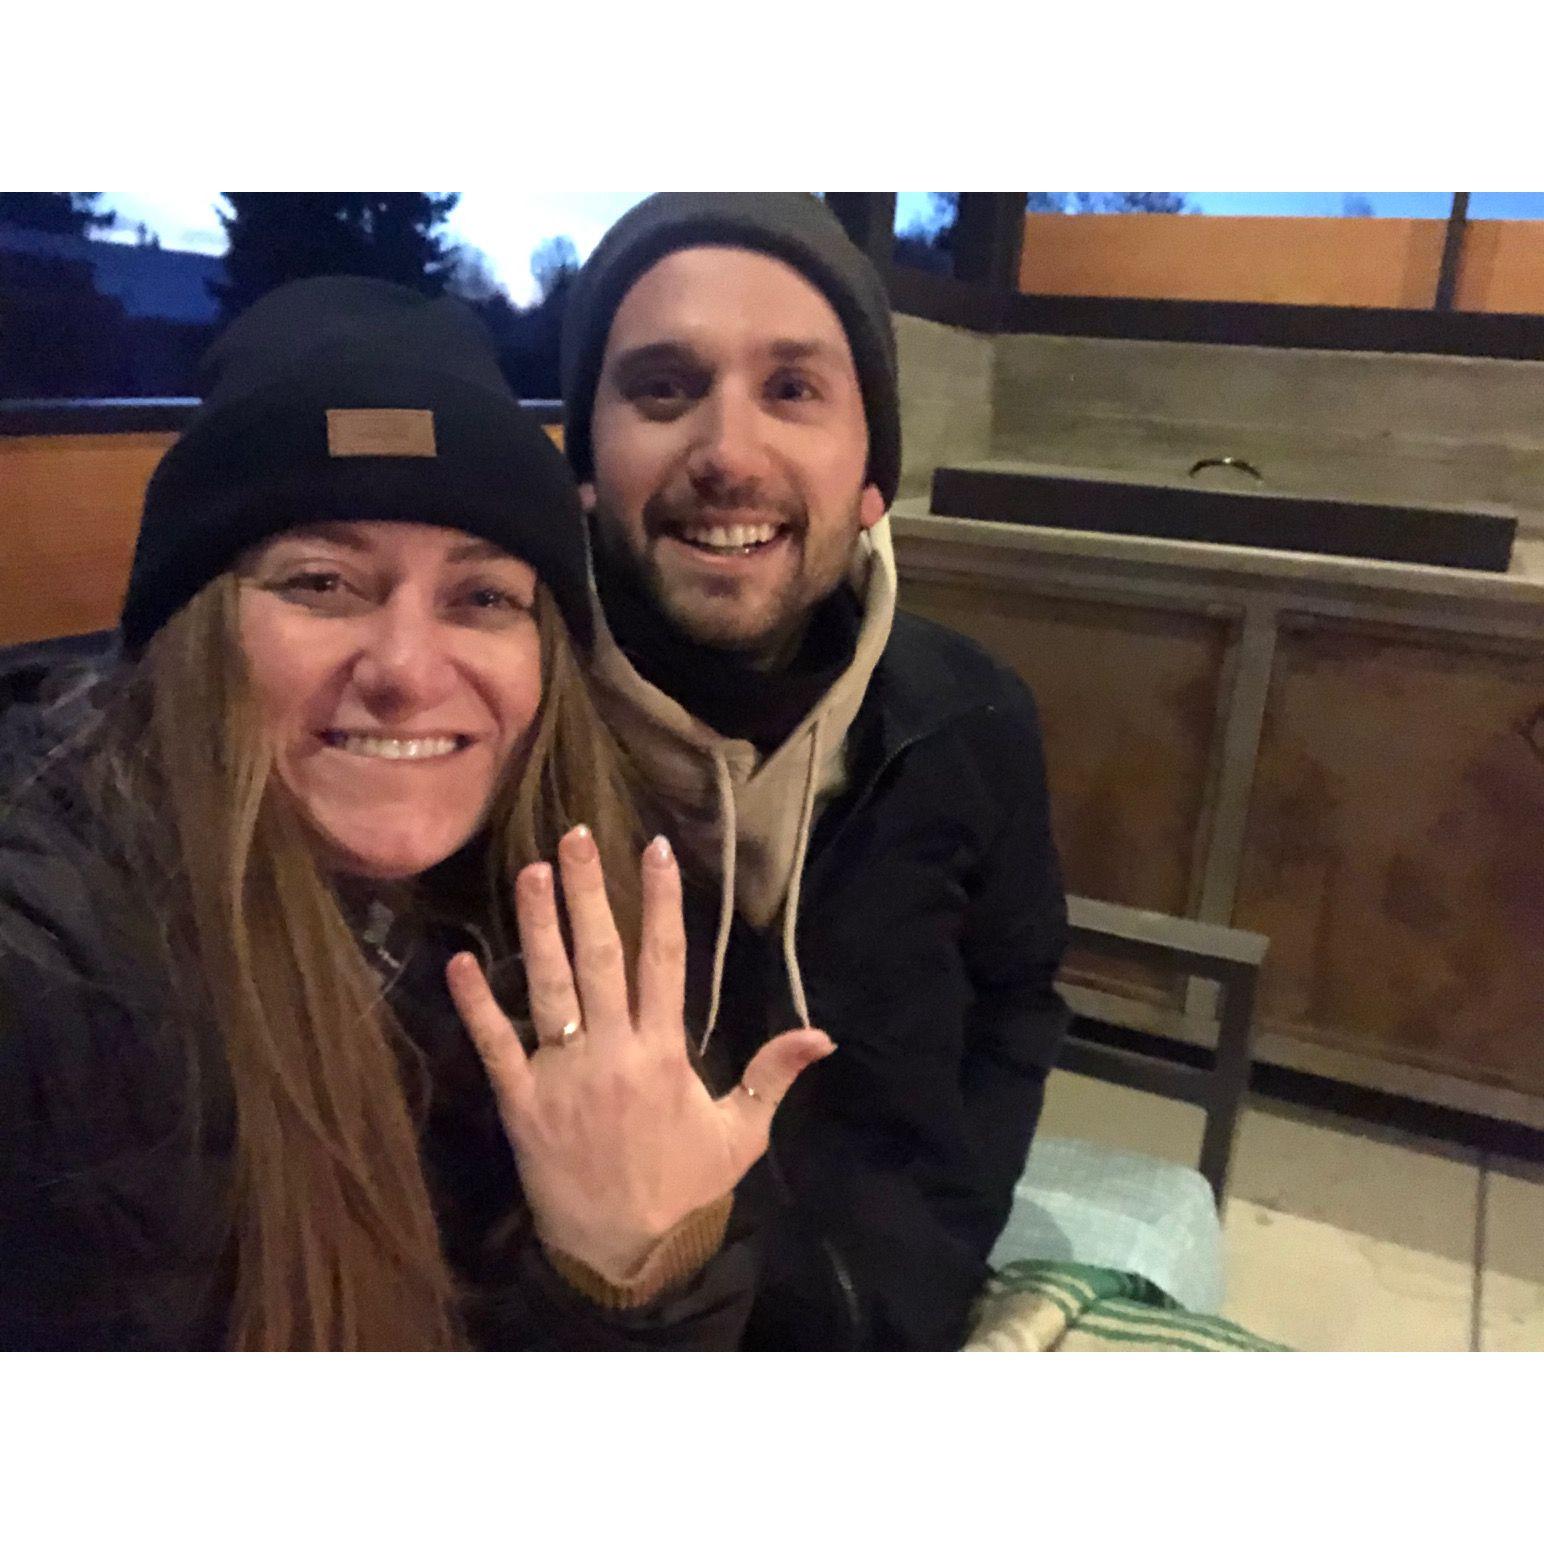 The night we got engaged!